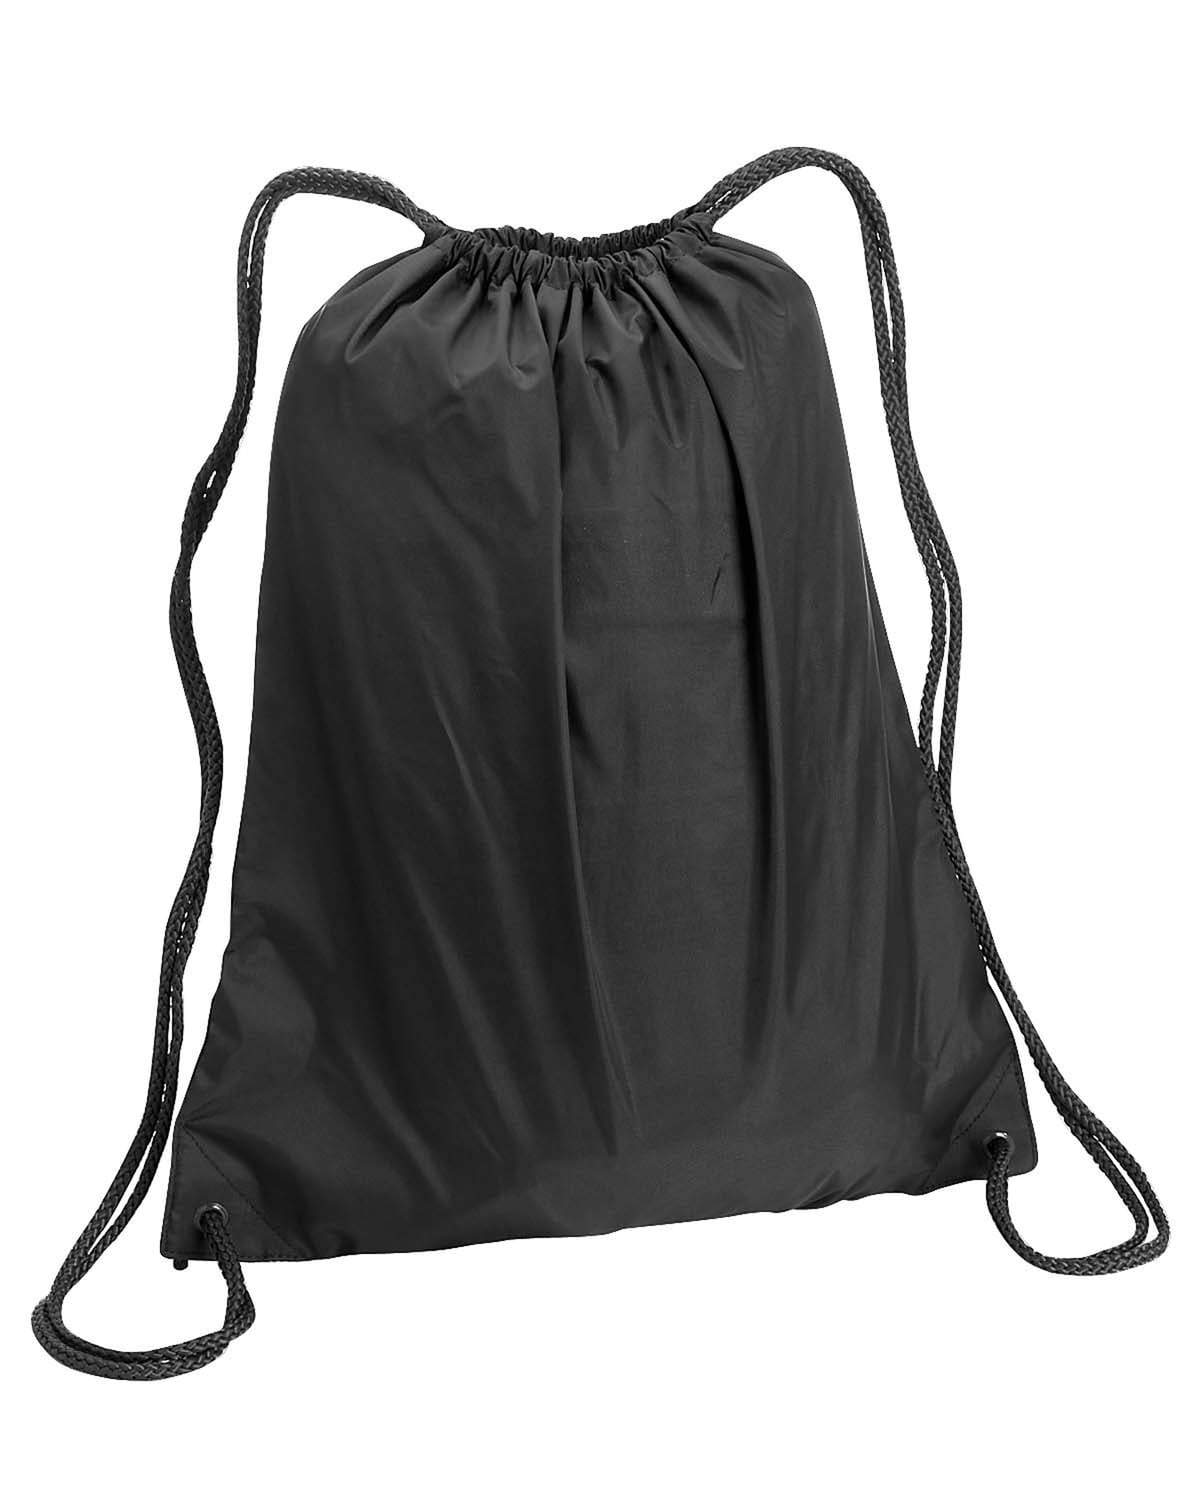 Details about   Sack Bag New Cute Waterproof Drawstring Printed Outdoor Sport Storage Backpack 